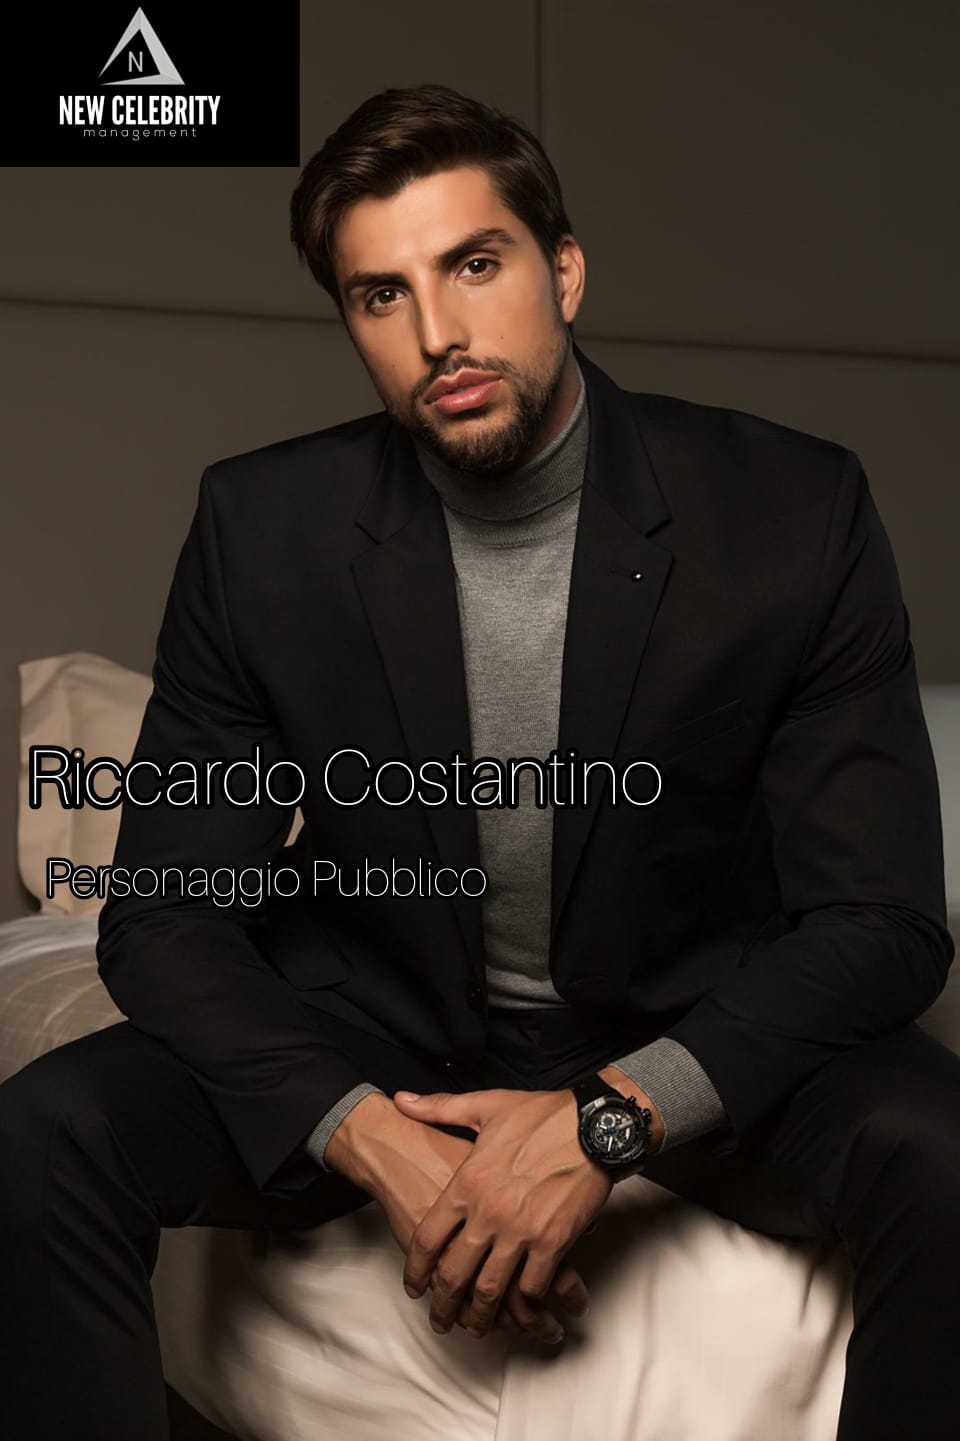 Riccardo Costantino